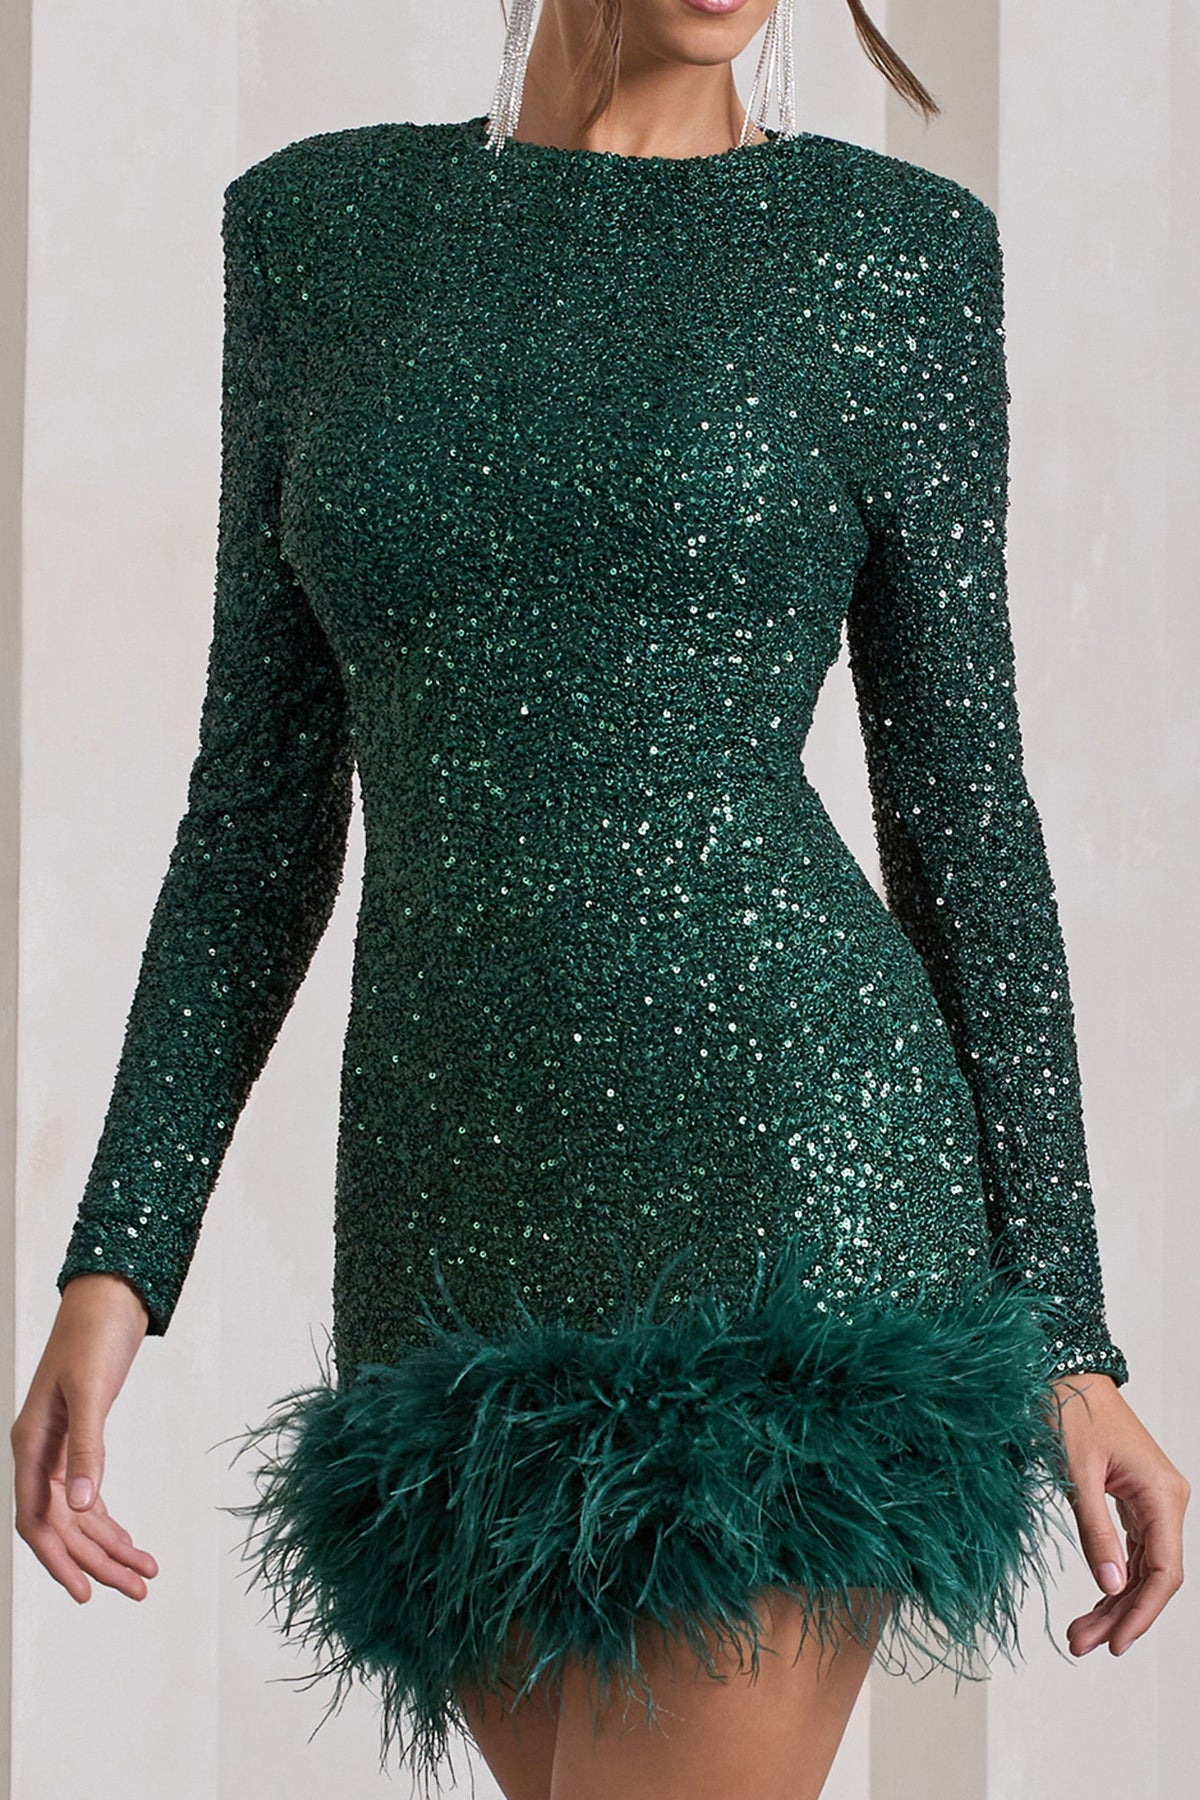 Mint Velvet Green Feather Mini Dress